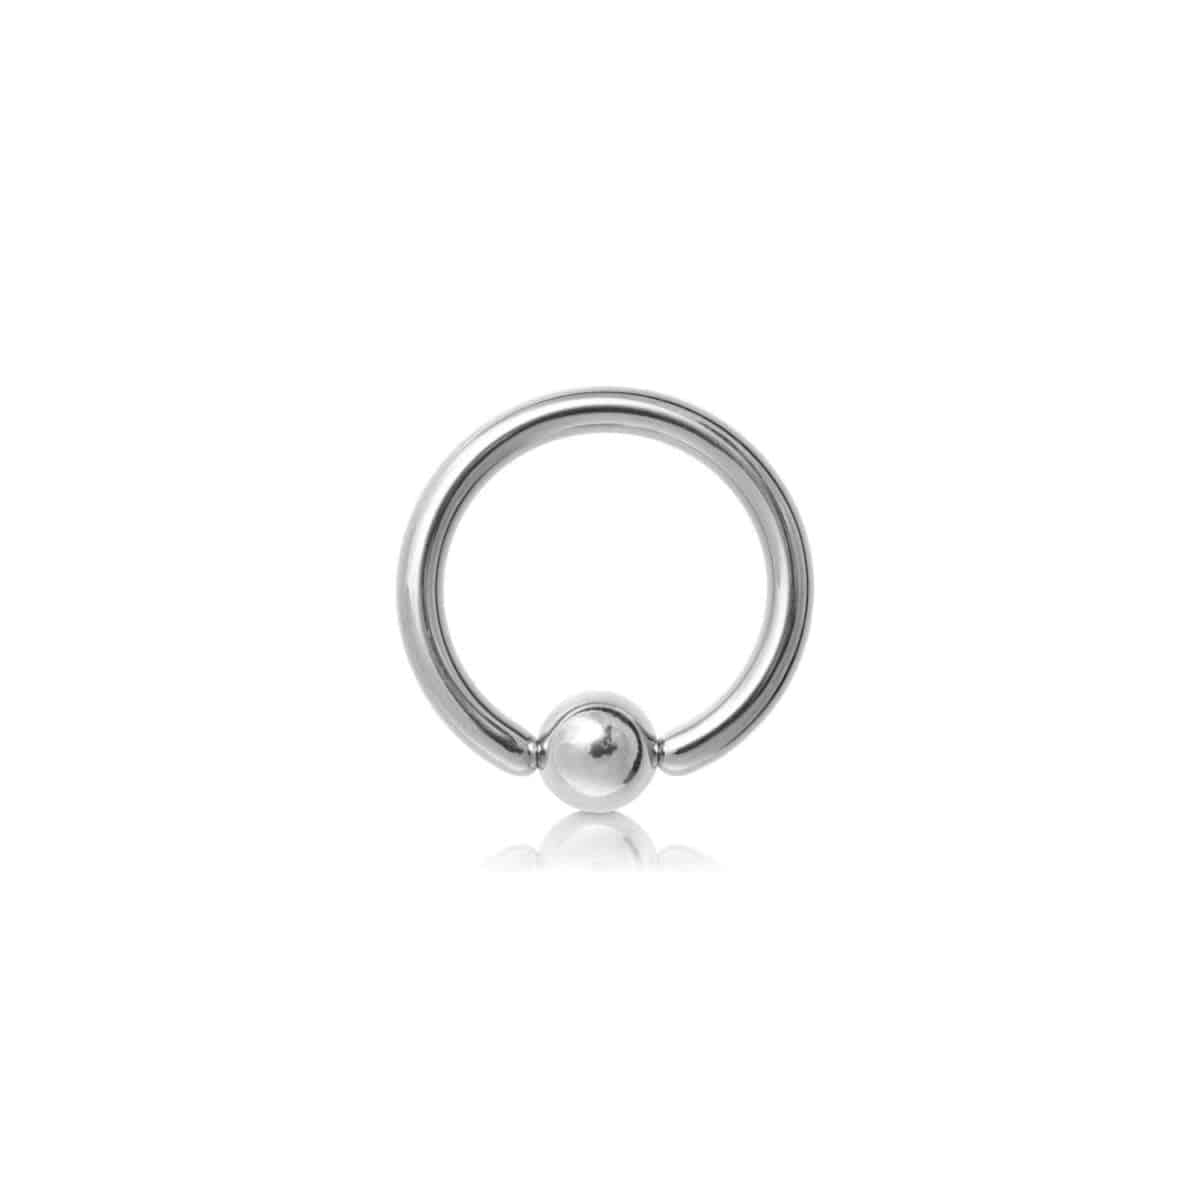 Steel Ball Closure Ring